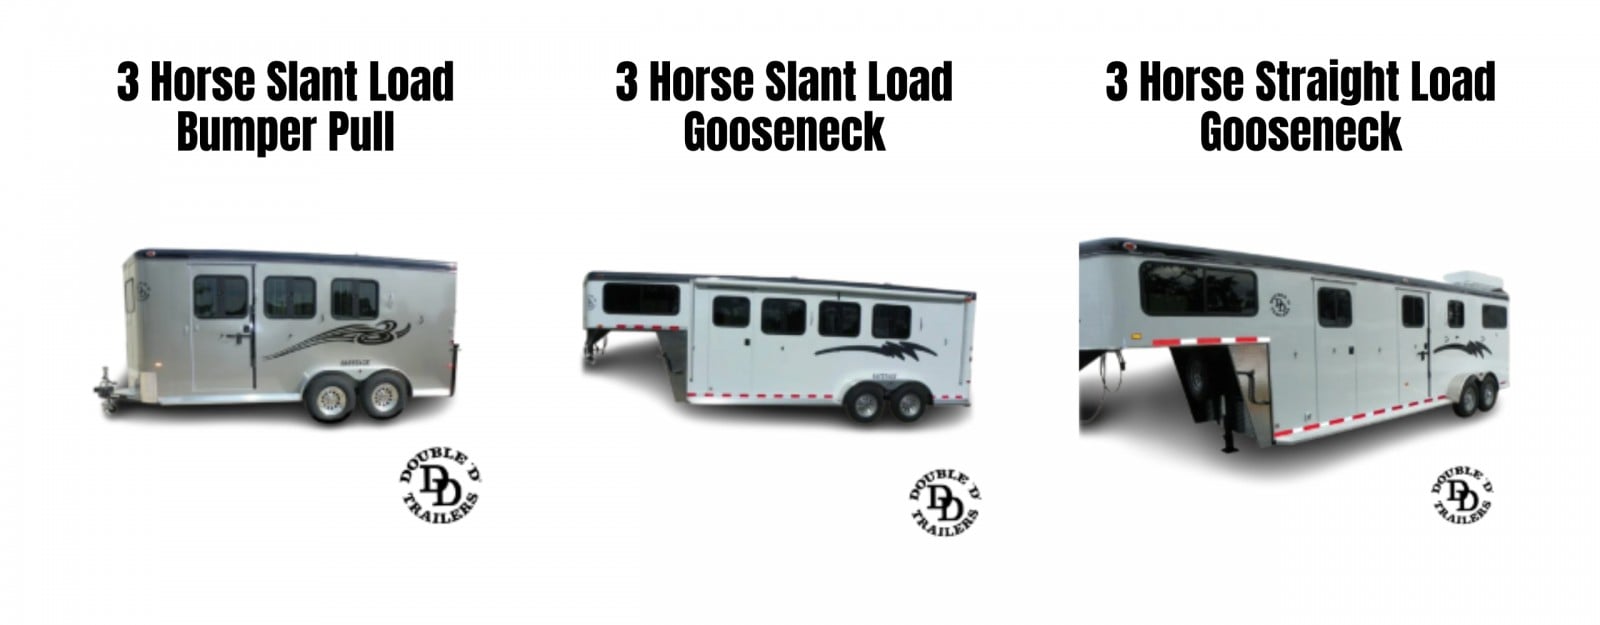 Double D Trailers 3 horse trailer models